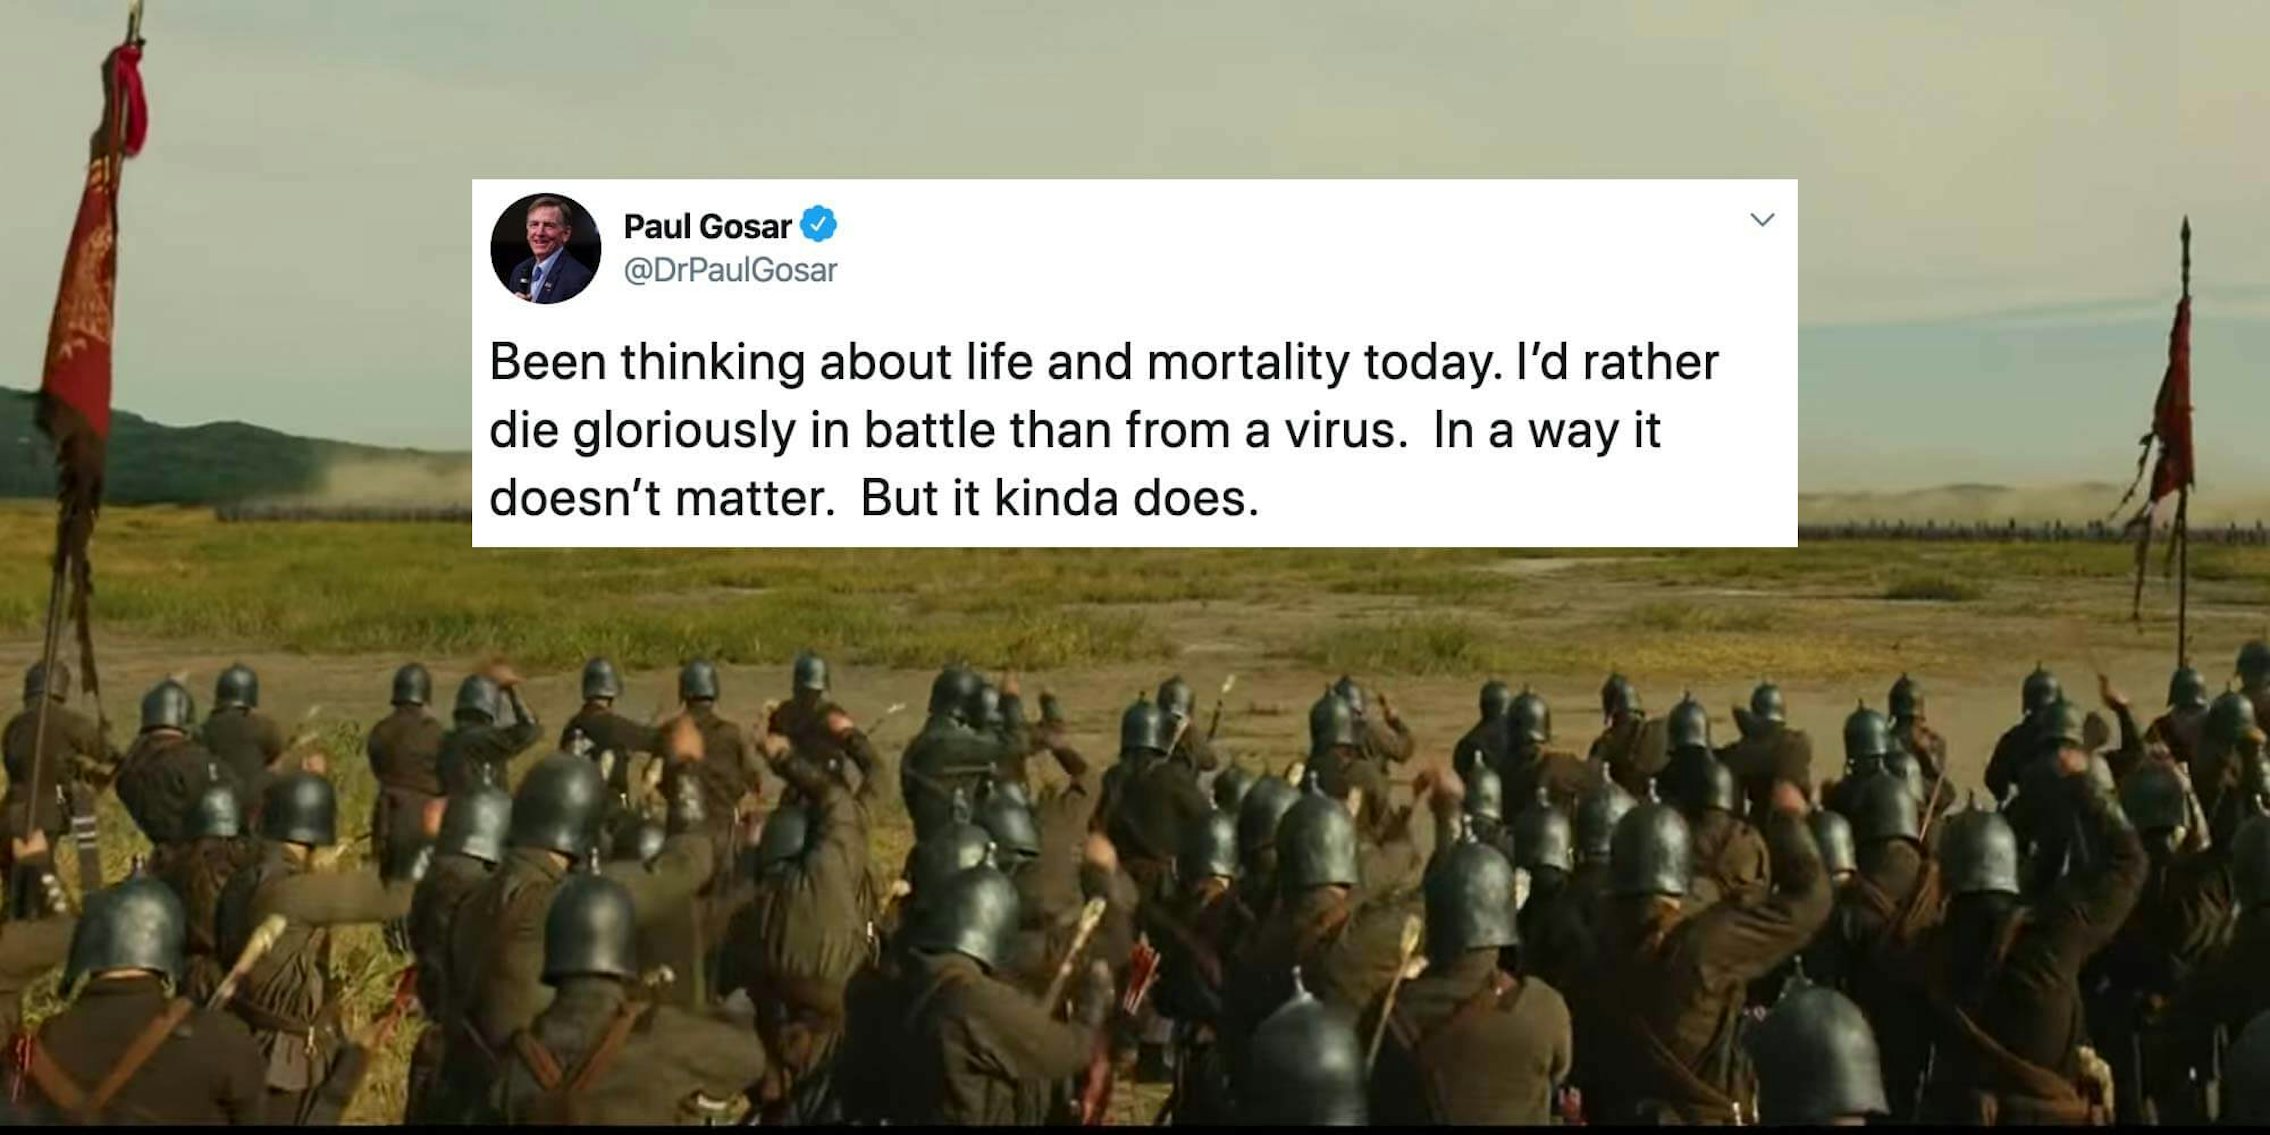 A tweet from Paul Gosar over an image of a battle